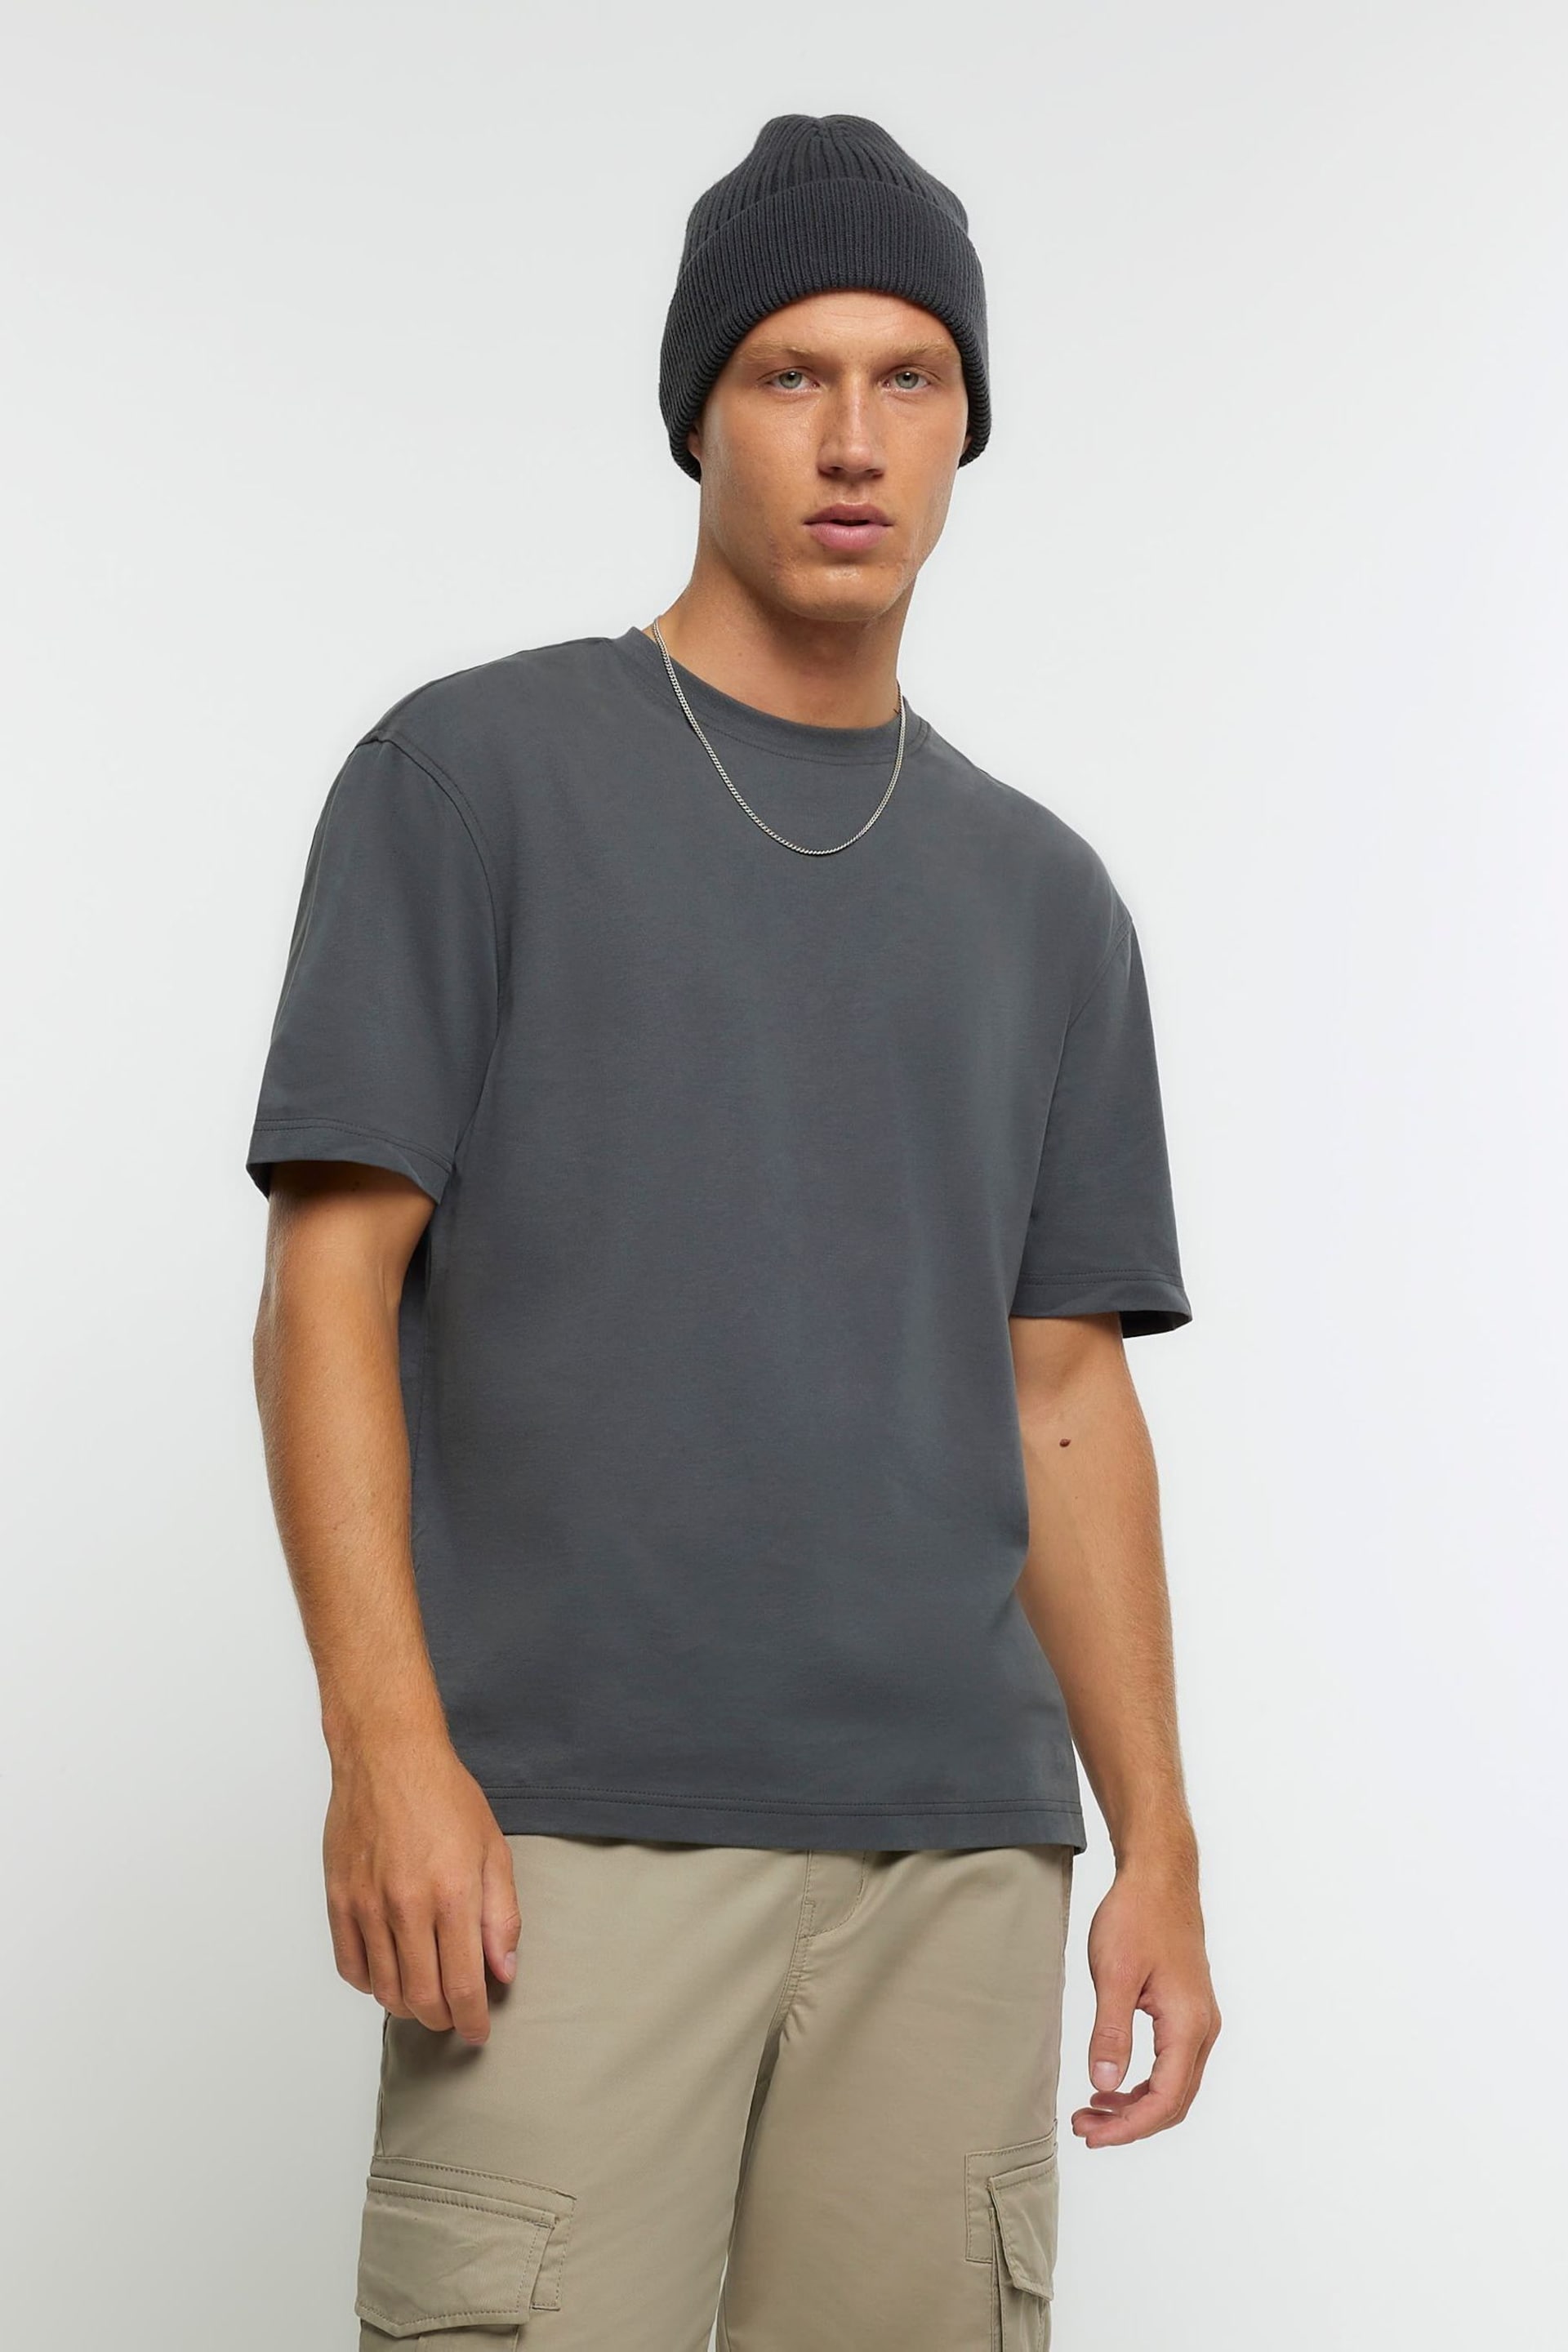 River Island Grey Regular Fit T-Shirt - Image 2 of 4